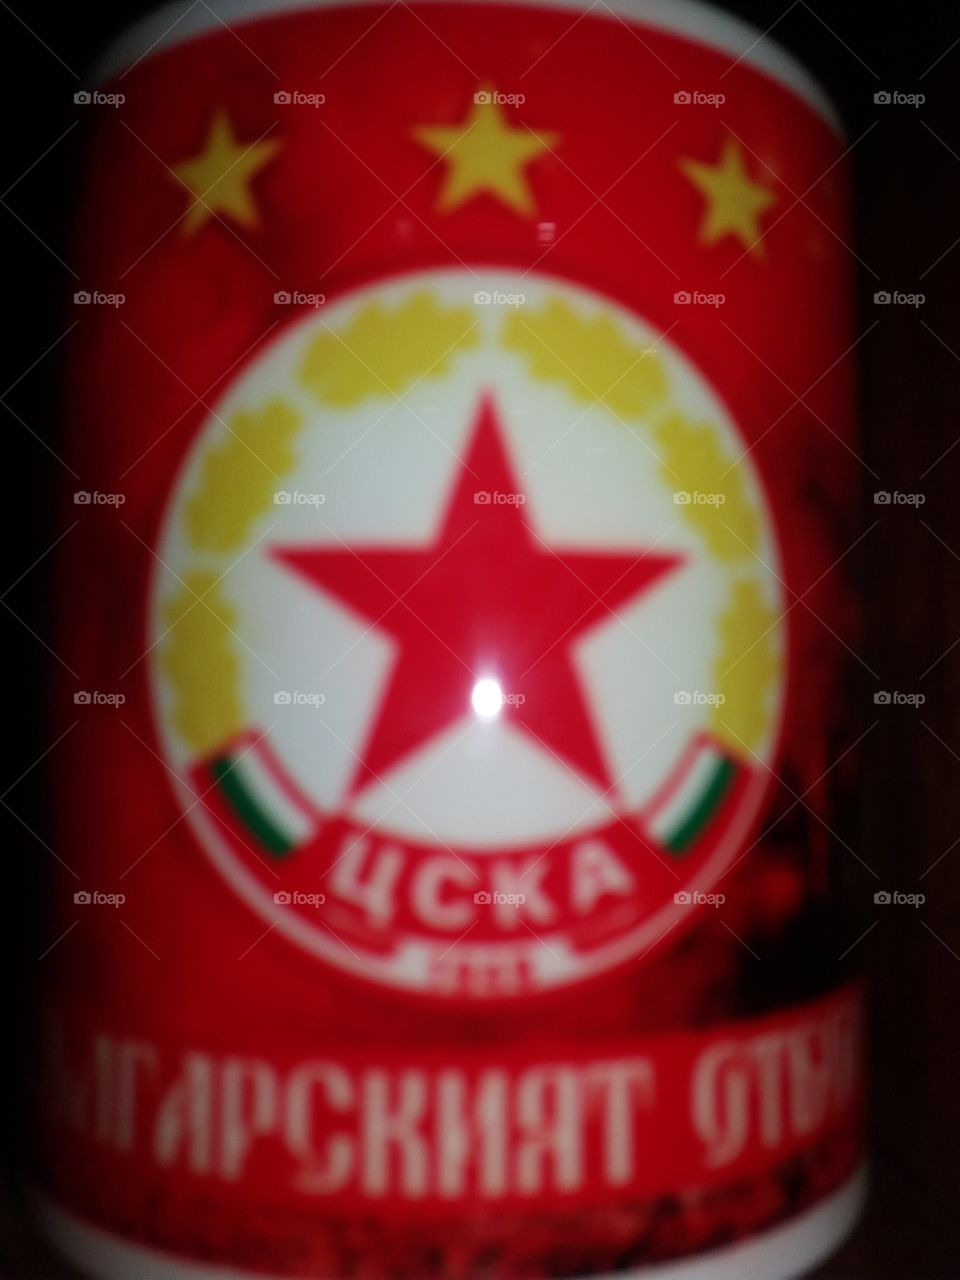 Bulgarian Football team CSKA